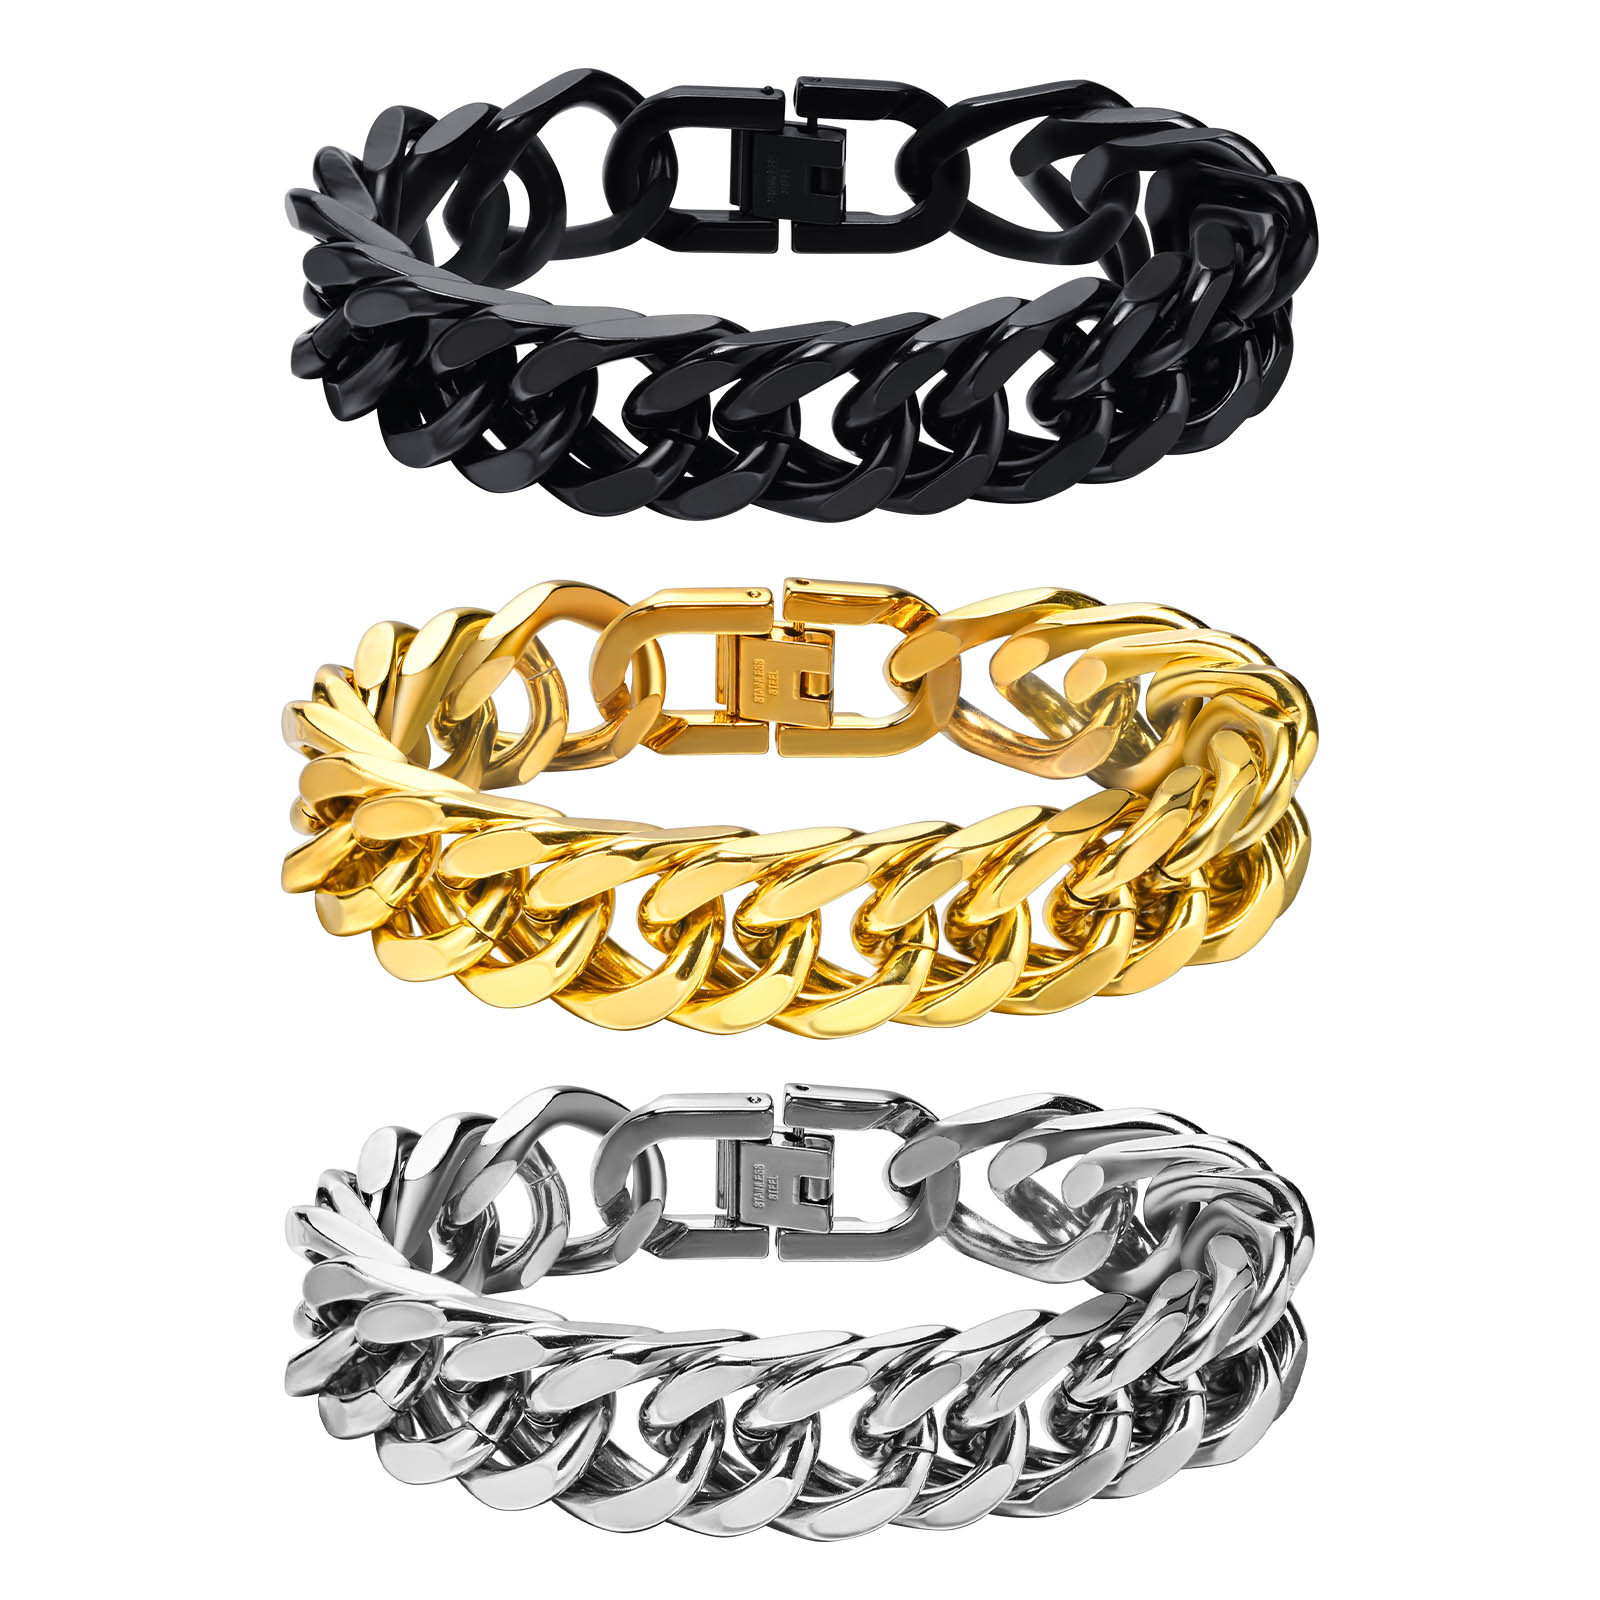 Gold chain width 15MM; bracelet total length 21.5